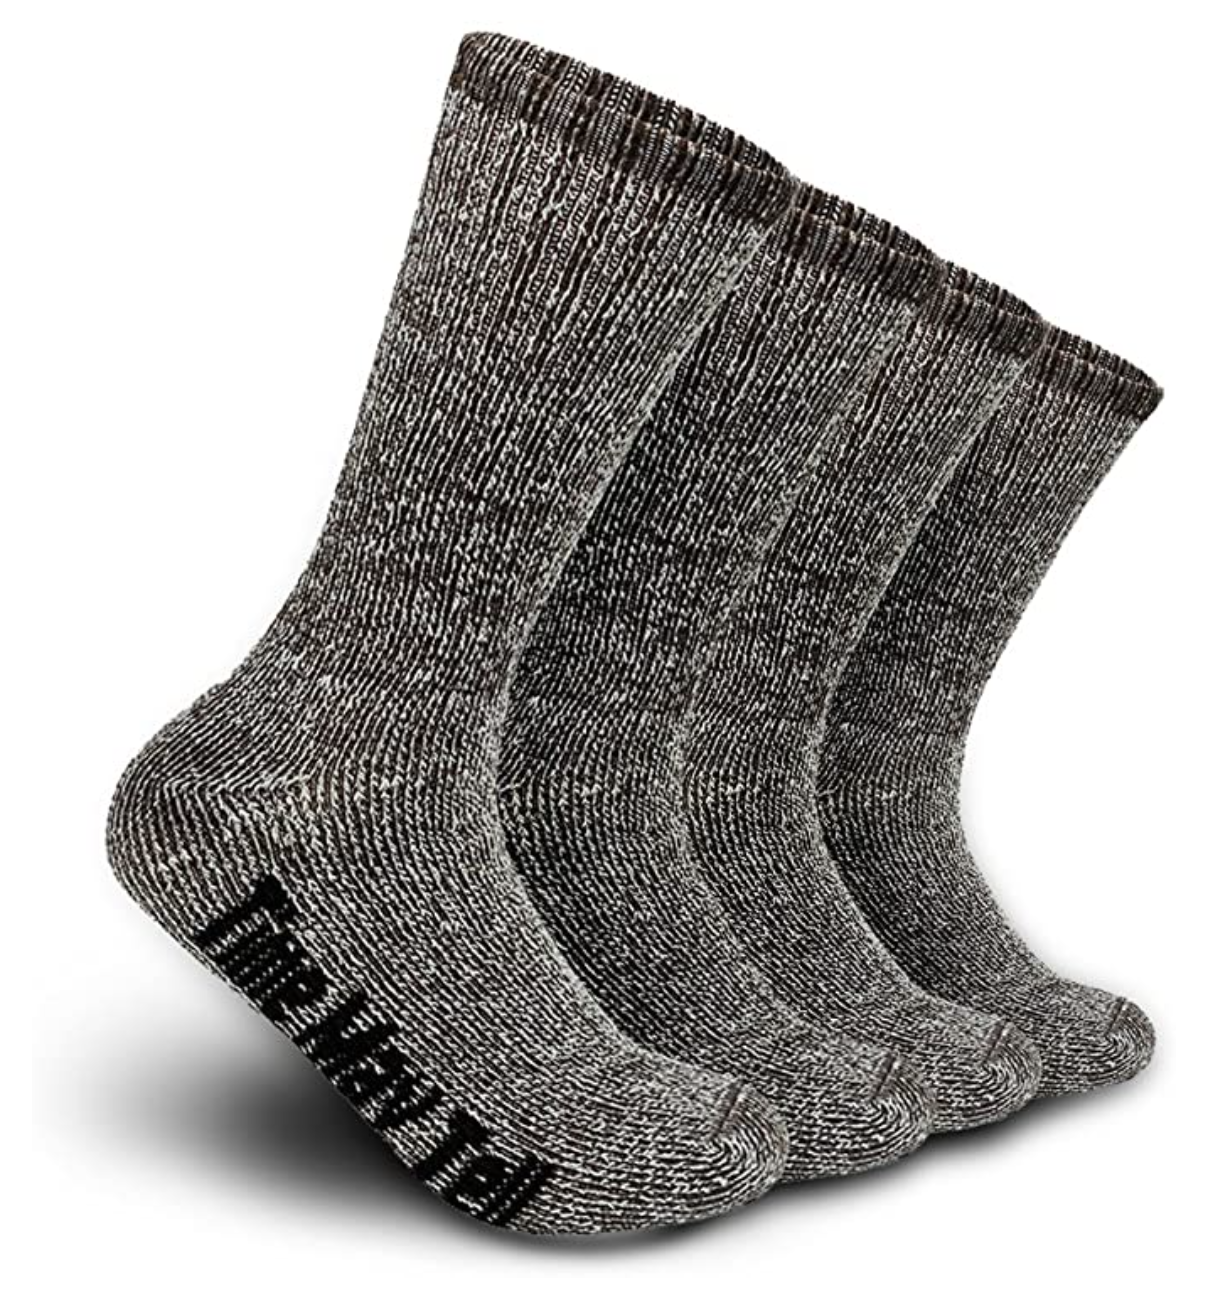 Time May Tell Professional Merino Wool Hiking Socks, 4-Pack